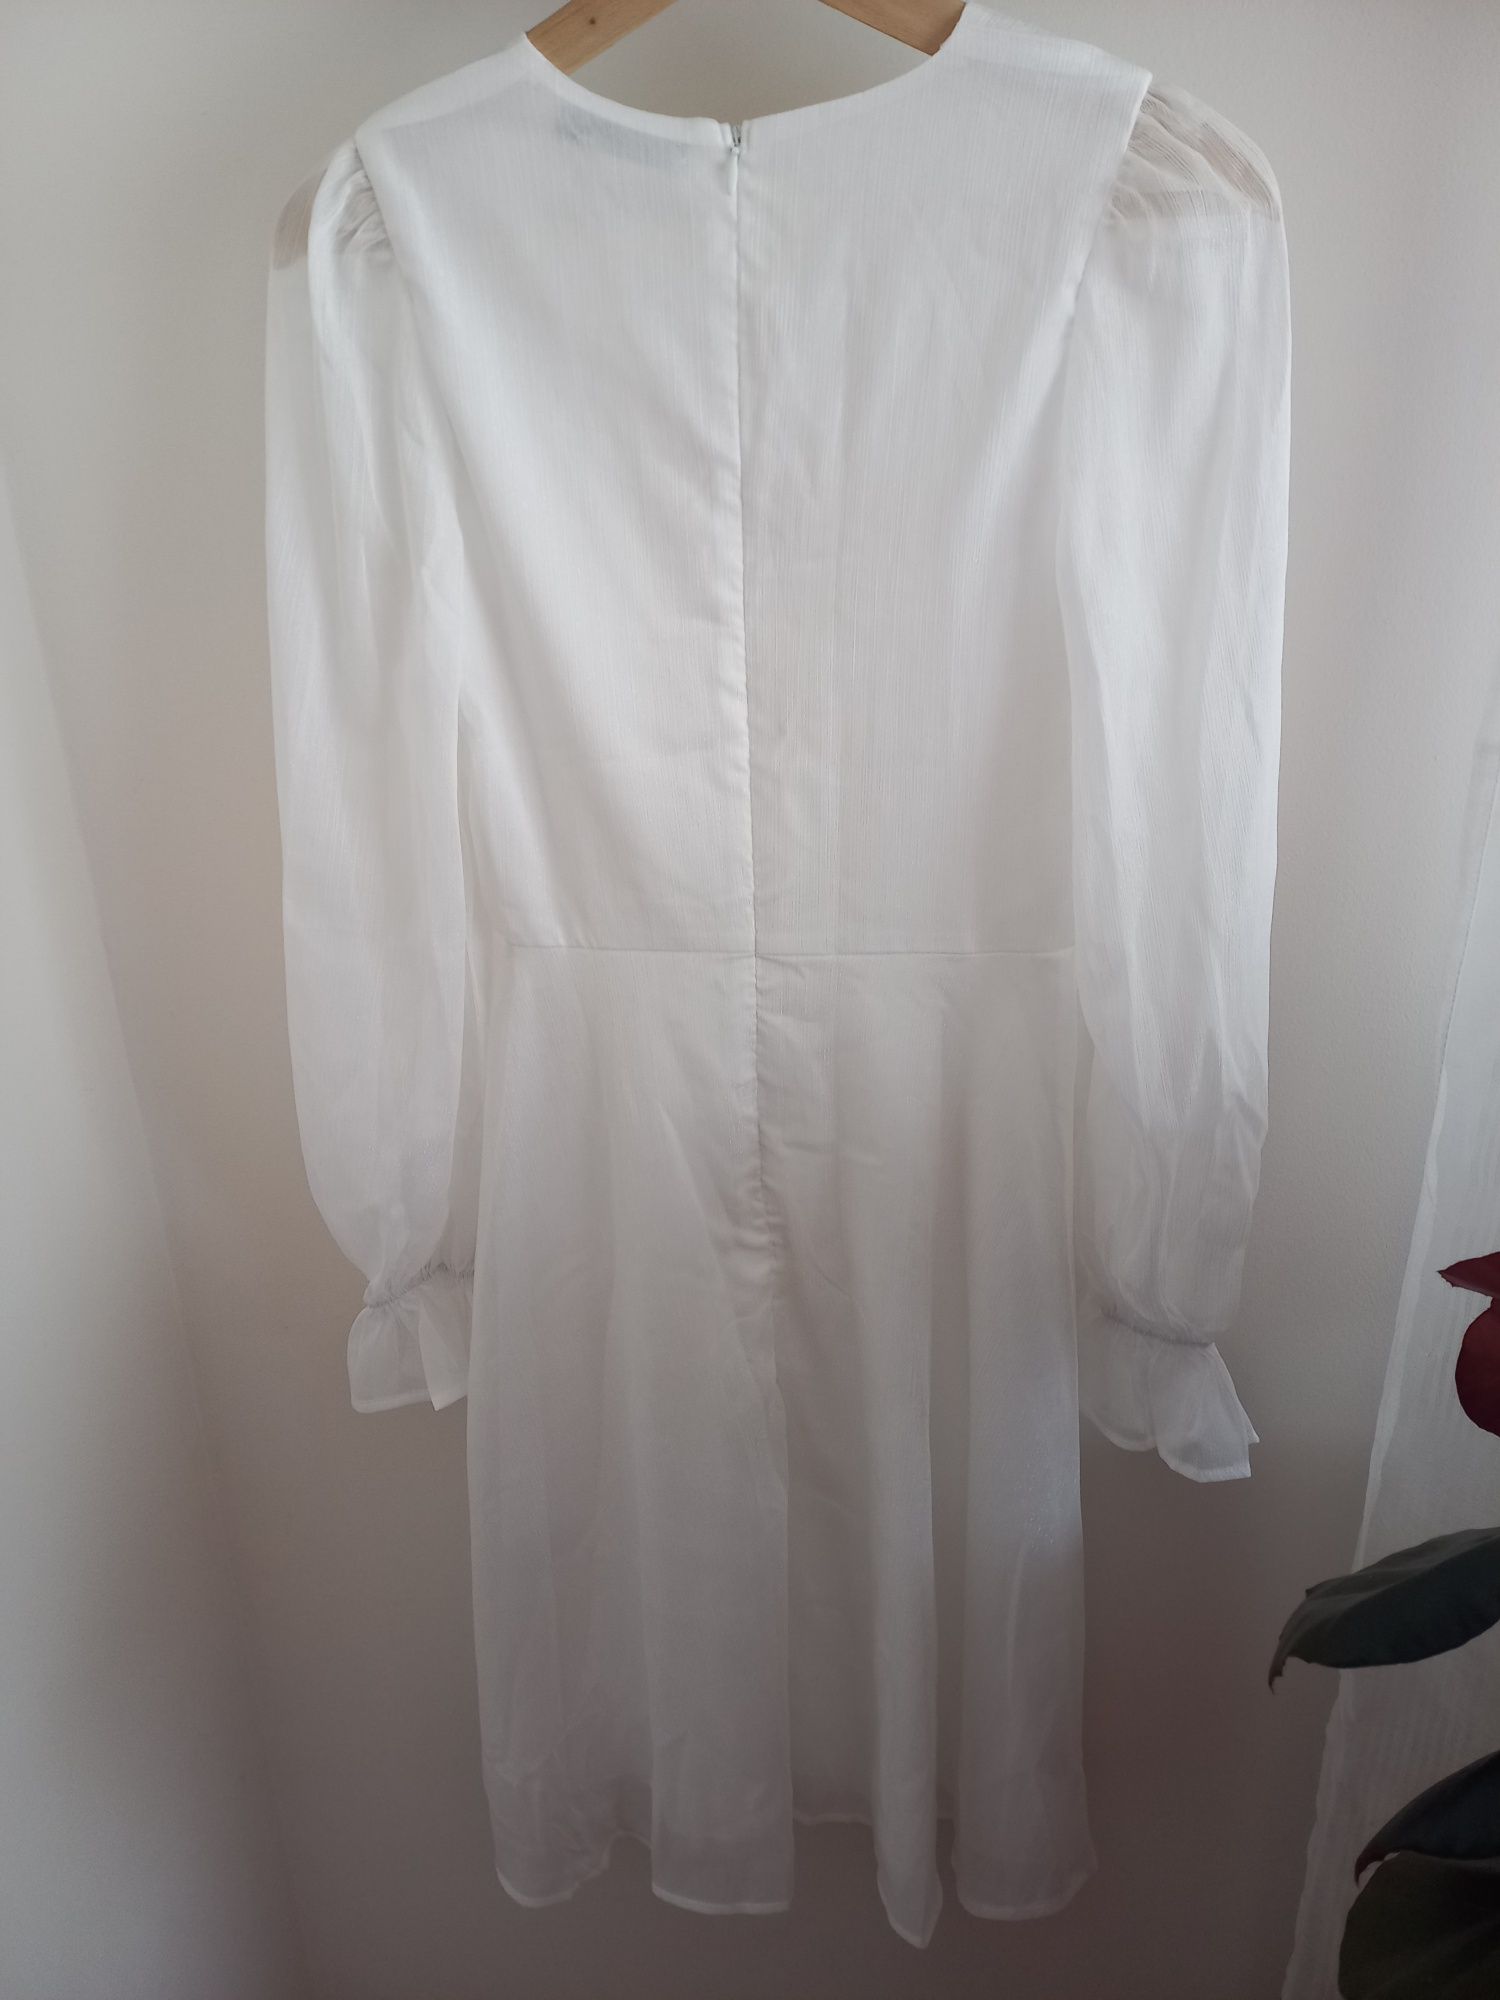 Vestido branco - tam S - Shein (NOVO)

Completamente novo, nunca usado